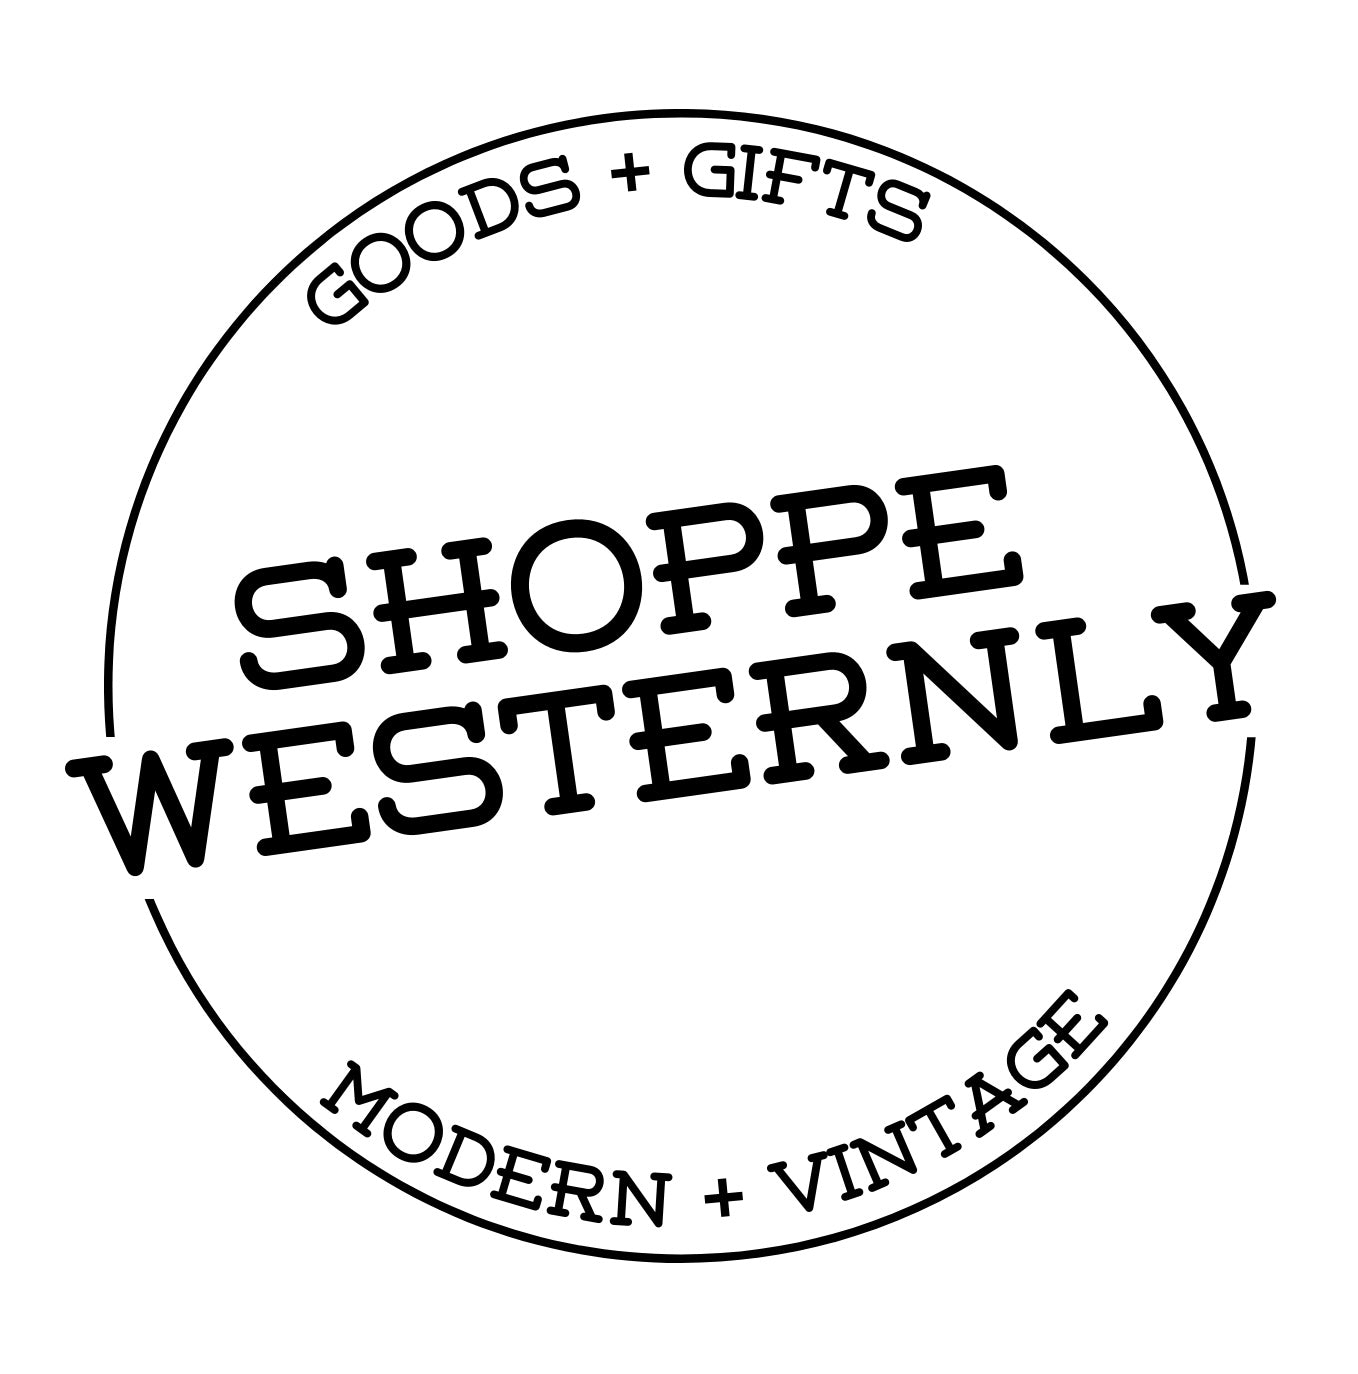 Shoppe Westernly